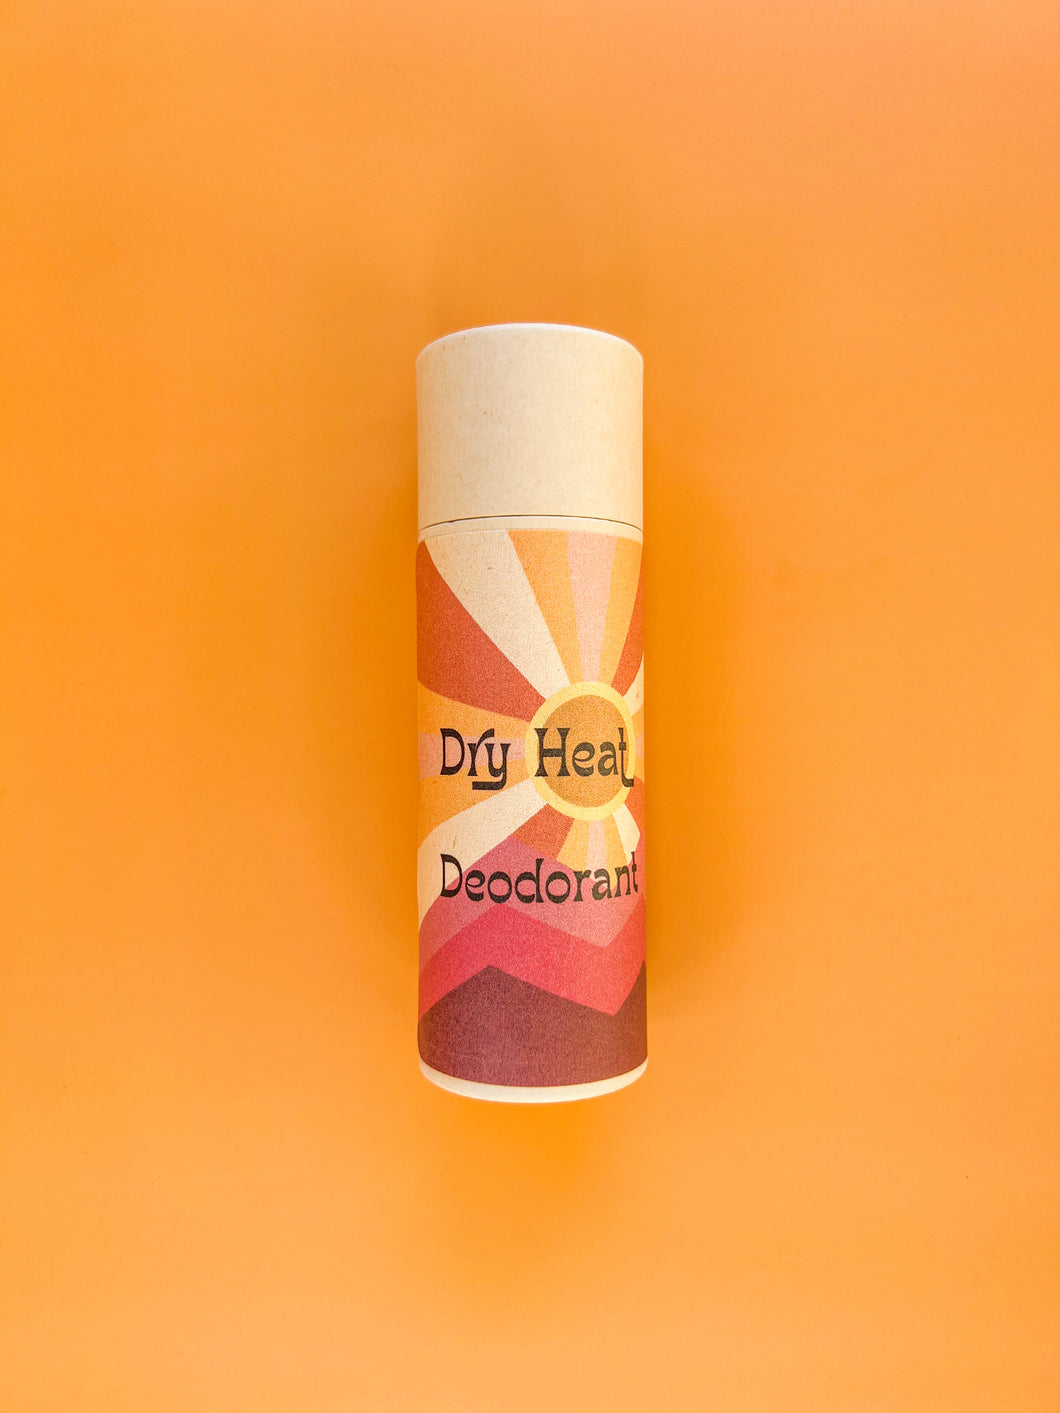 Dry Heat - all natural gender neutral biodegradable deodorant